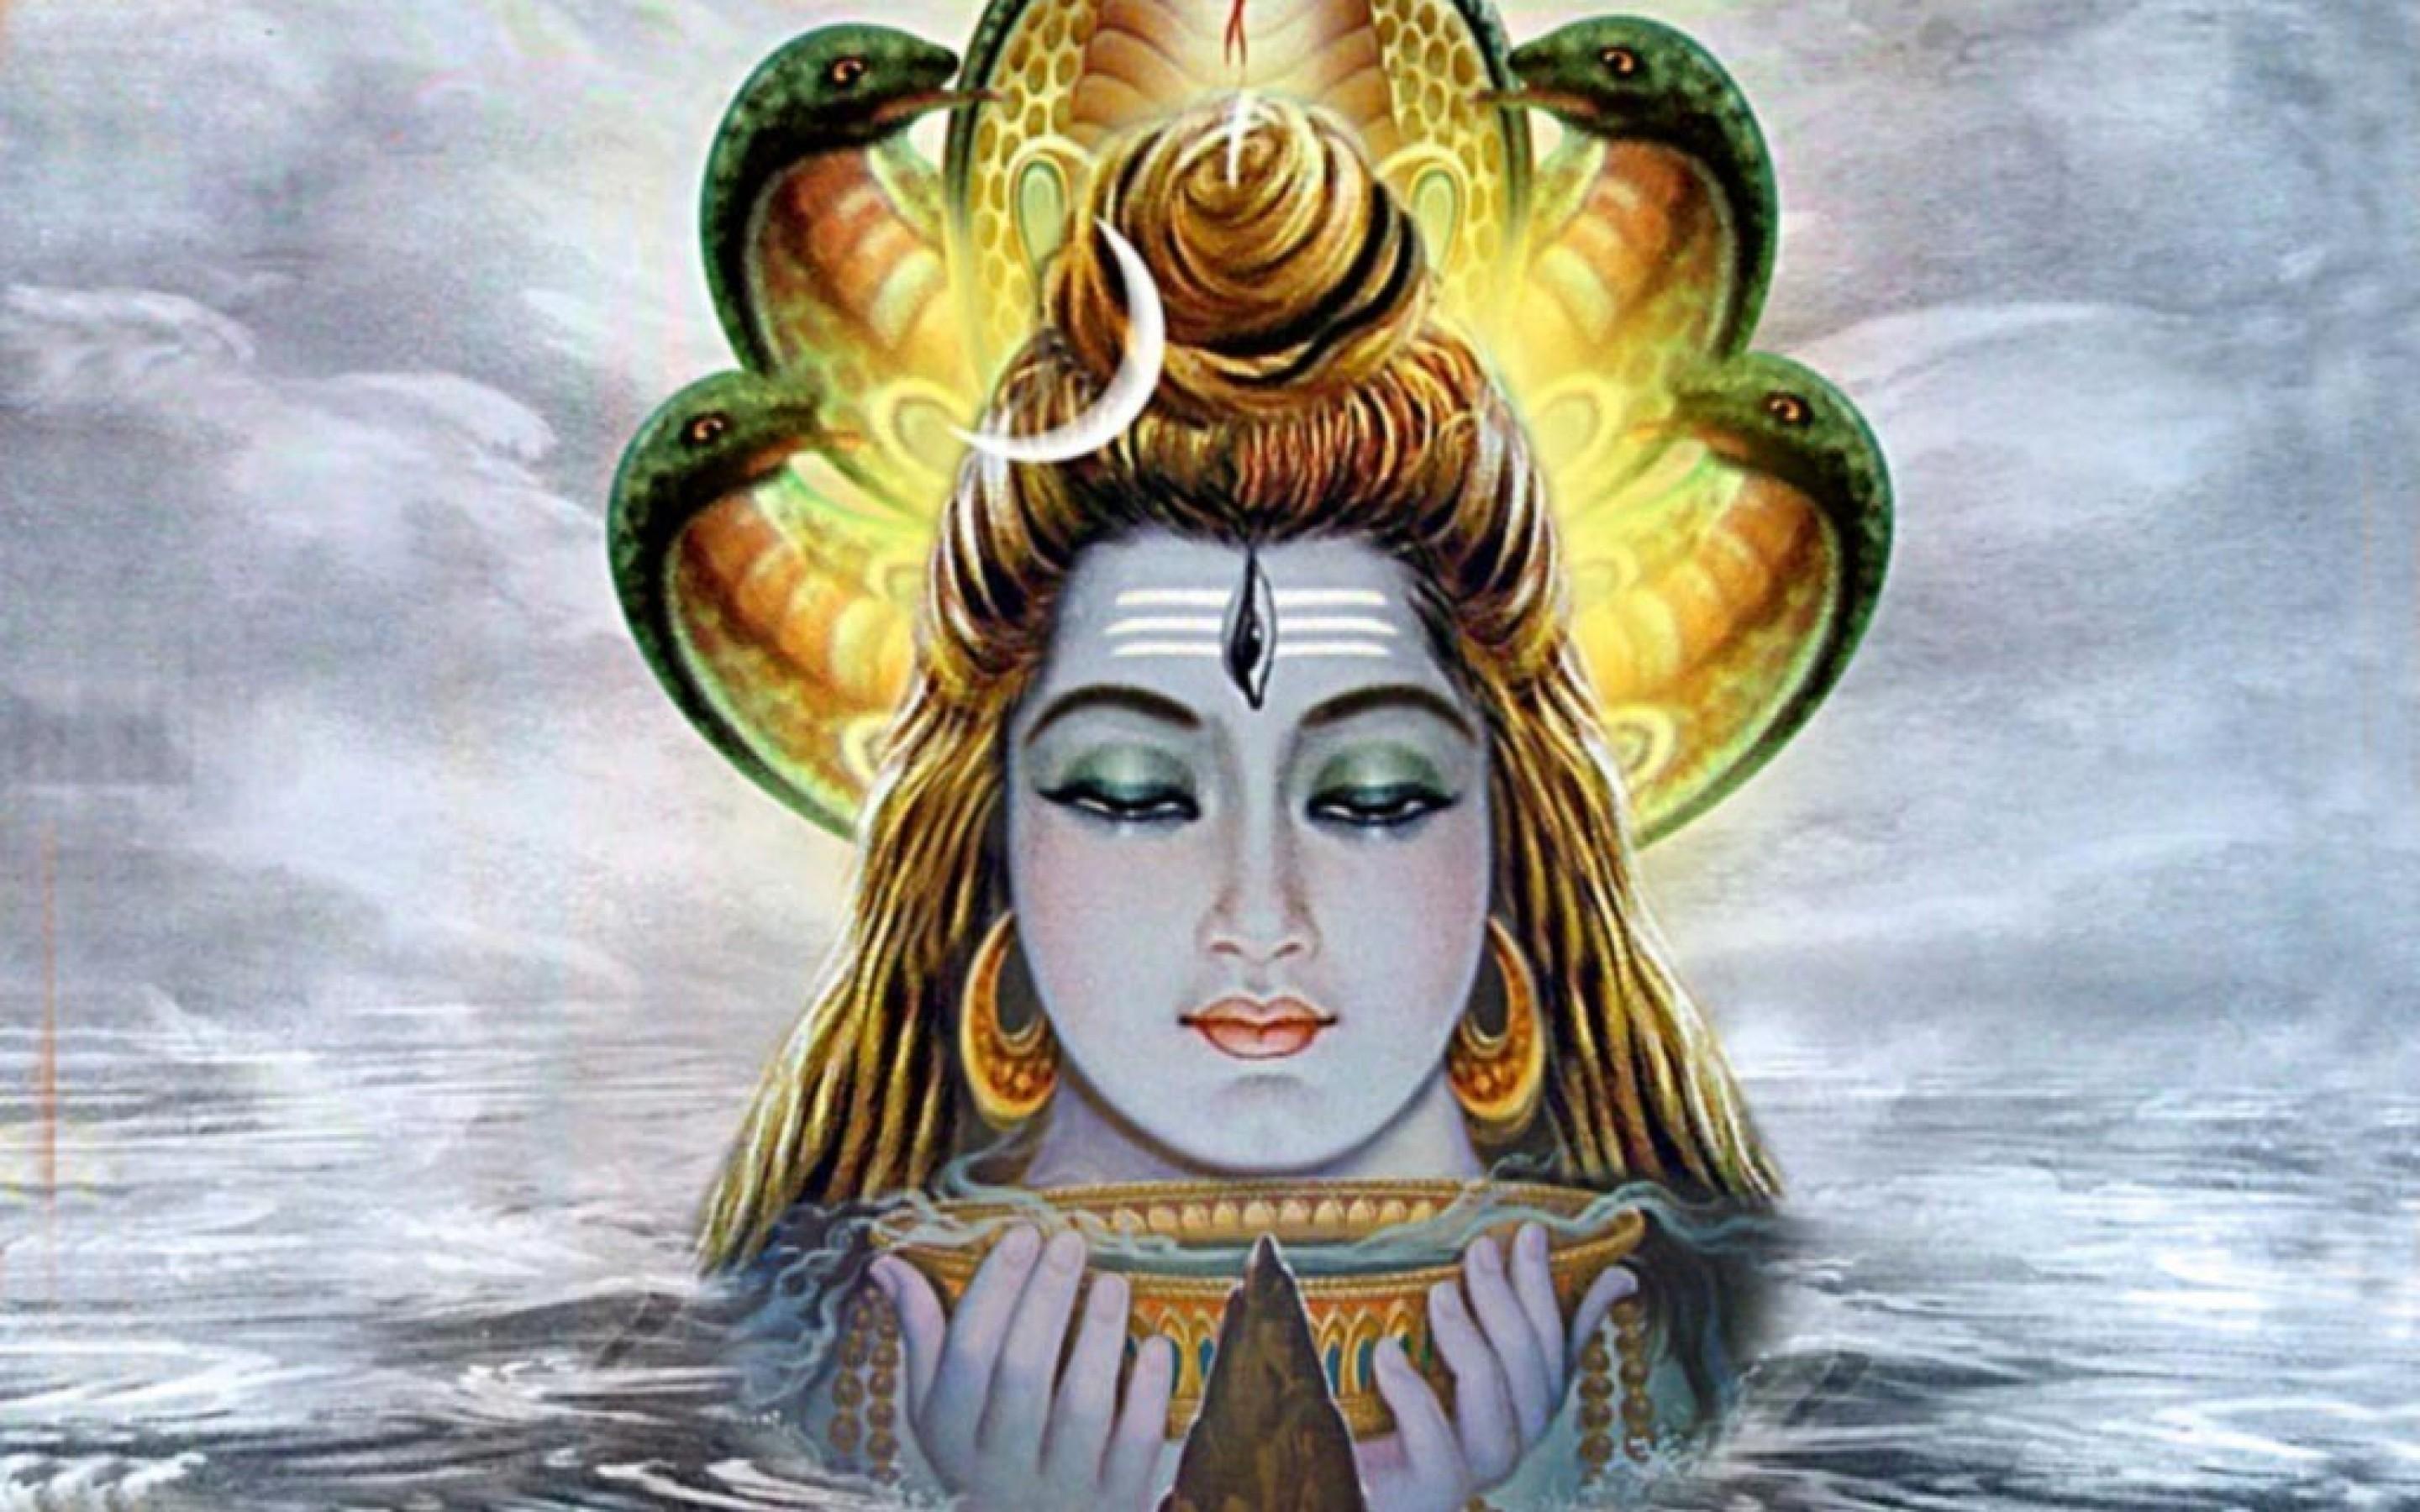 God Hd, Shiva Animated Wallpaper For Mobile